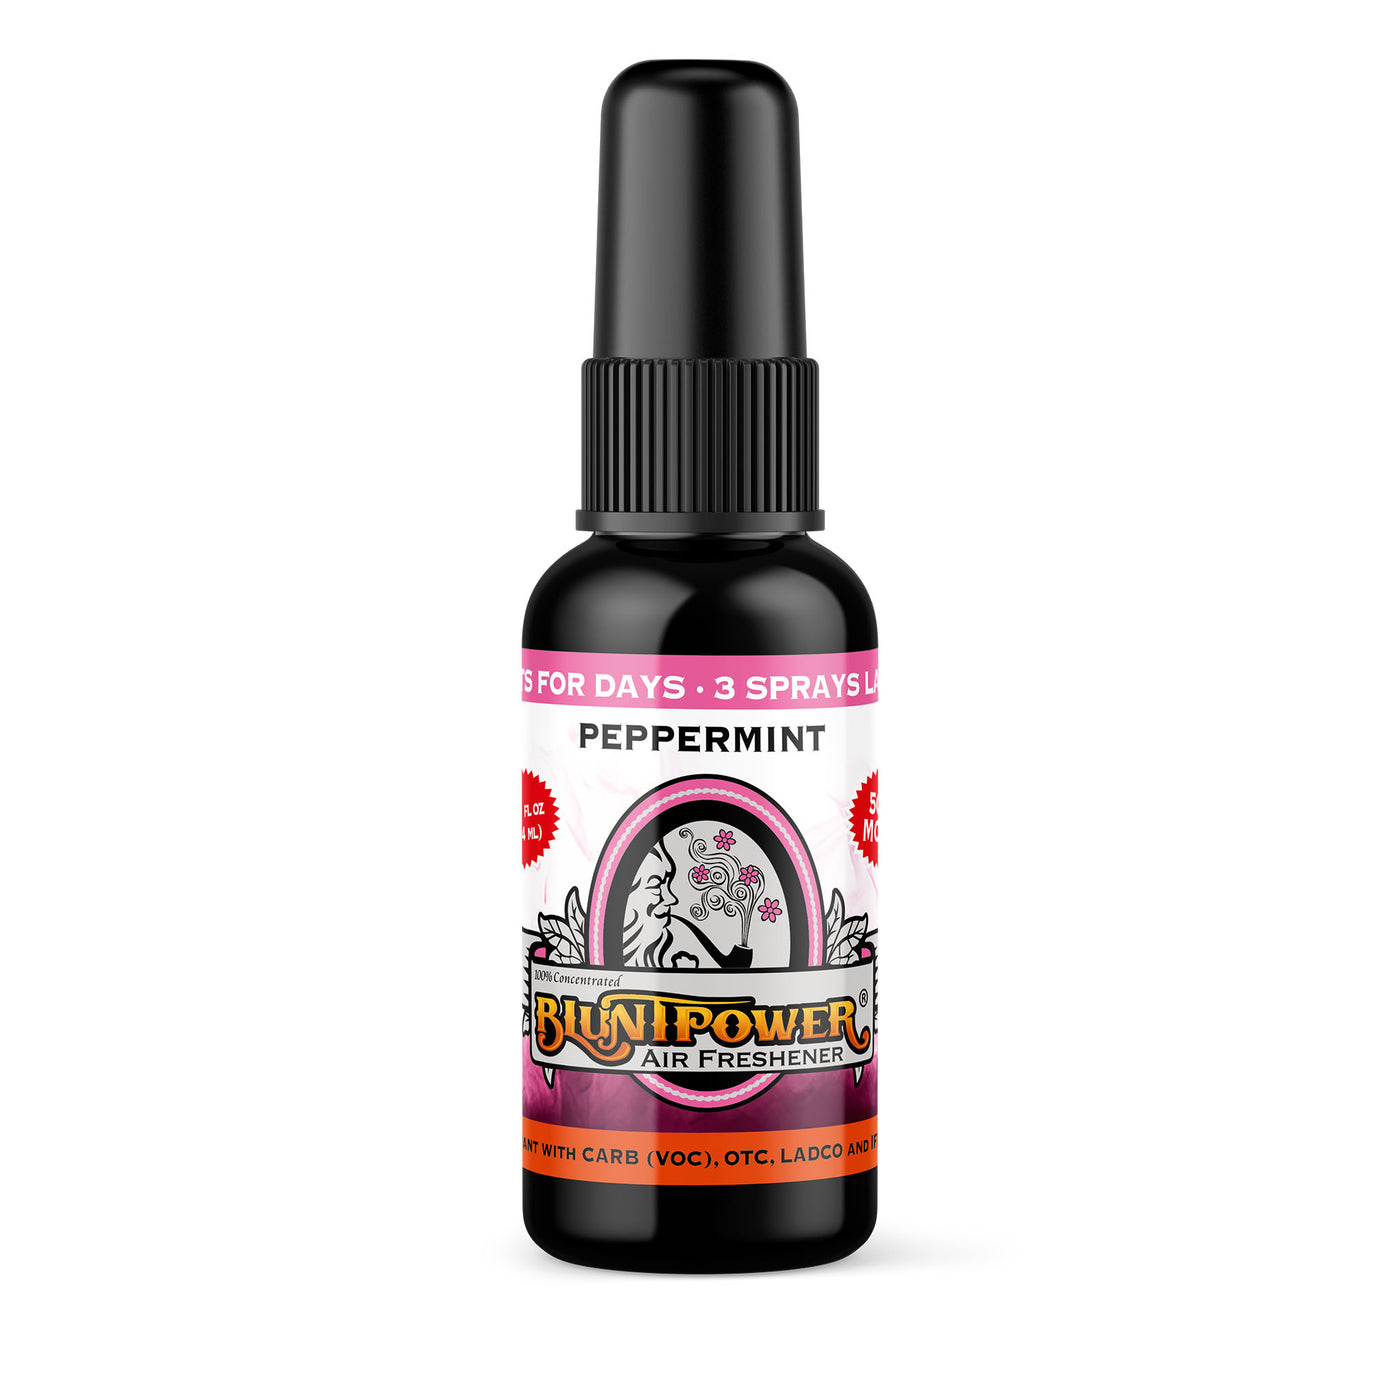 Peppermint Air Freshener Spray